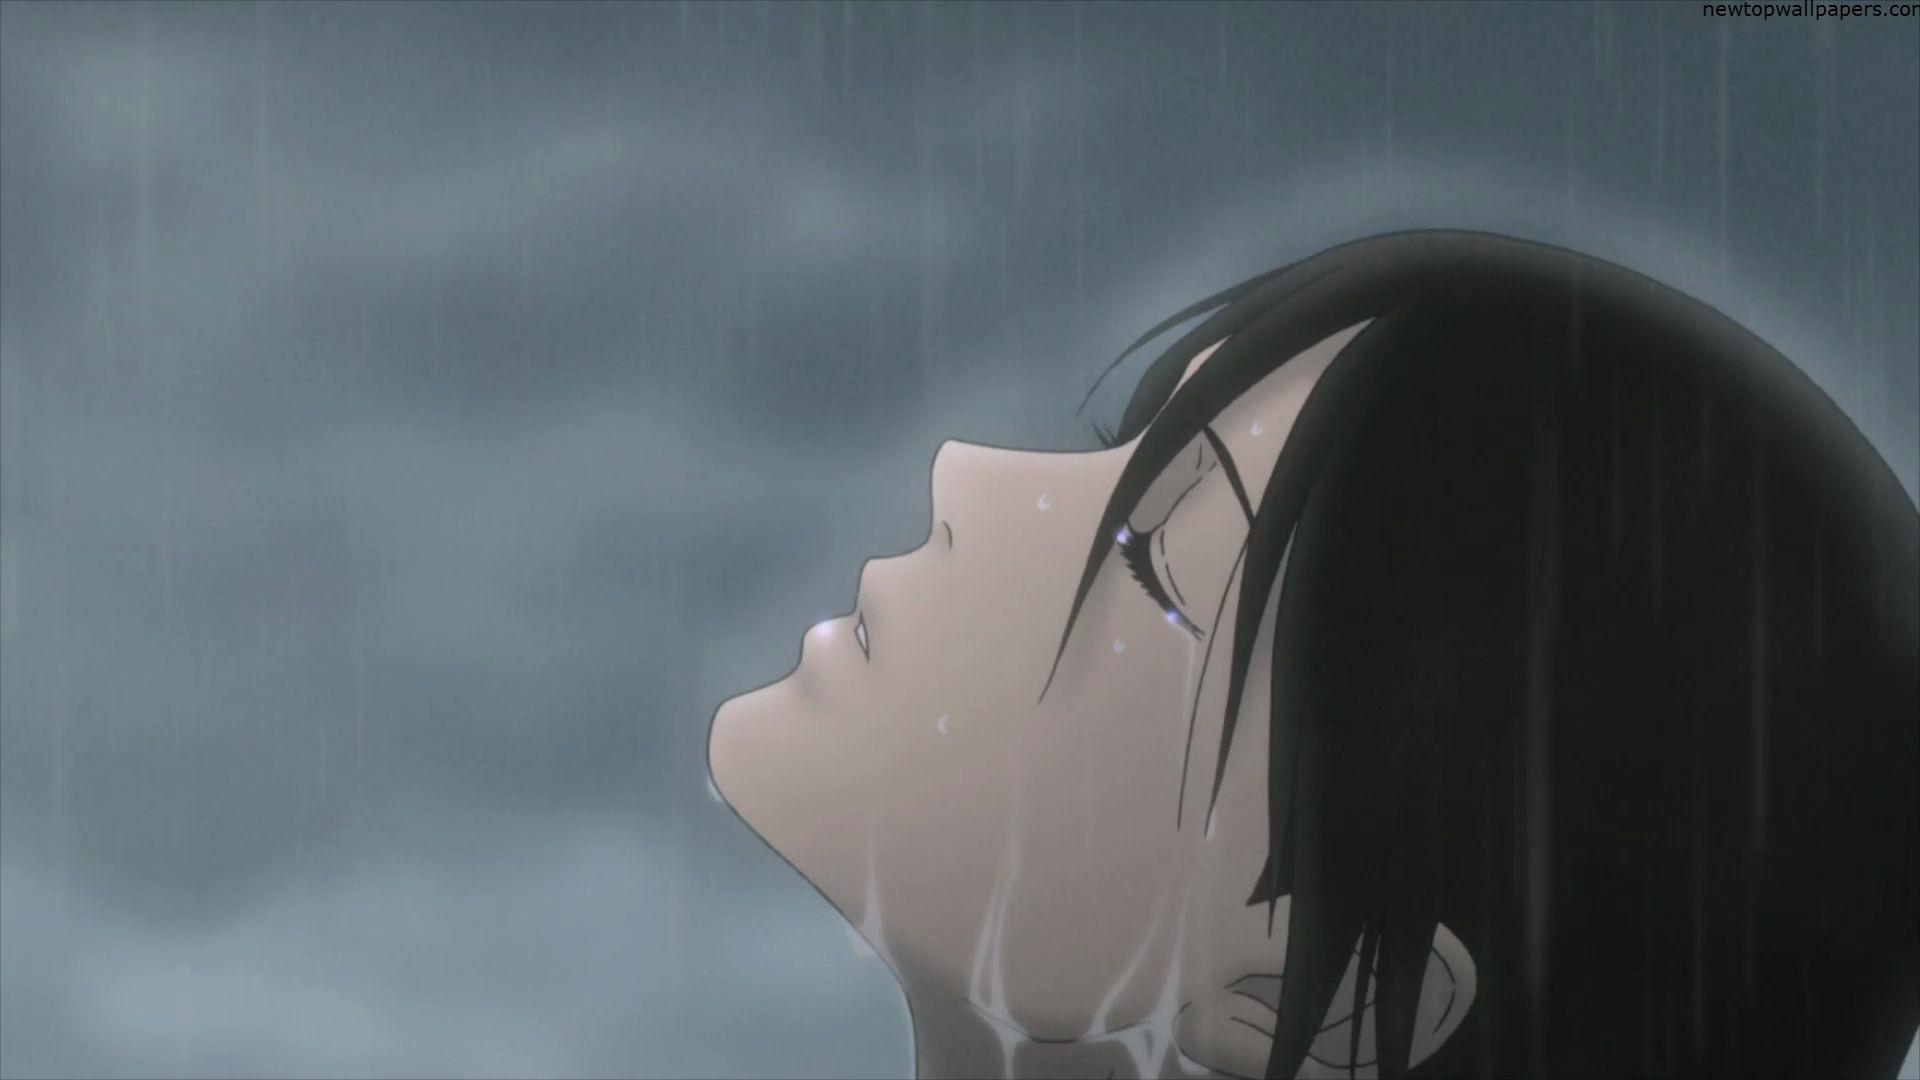 Anime Boy Alone. Alone Anime Girl in Rain Free Download HD